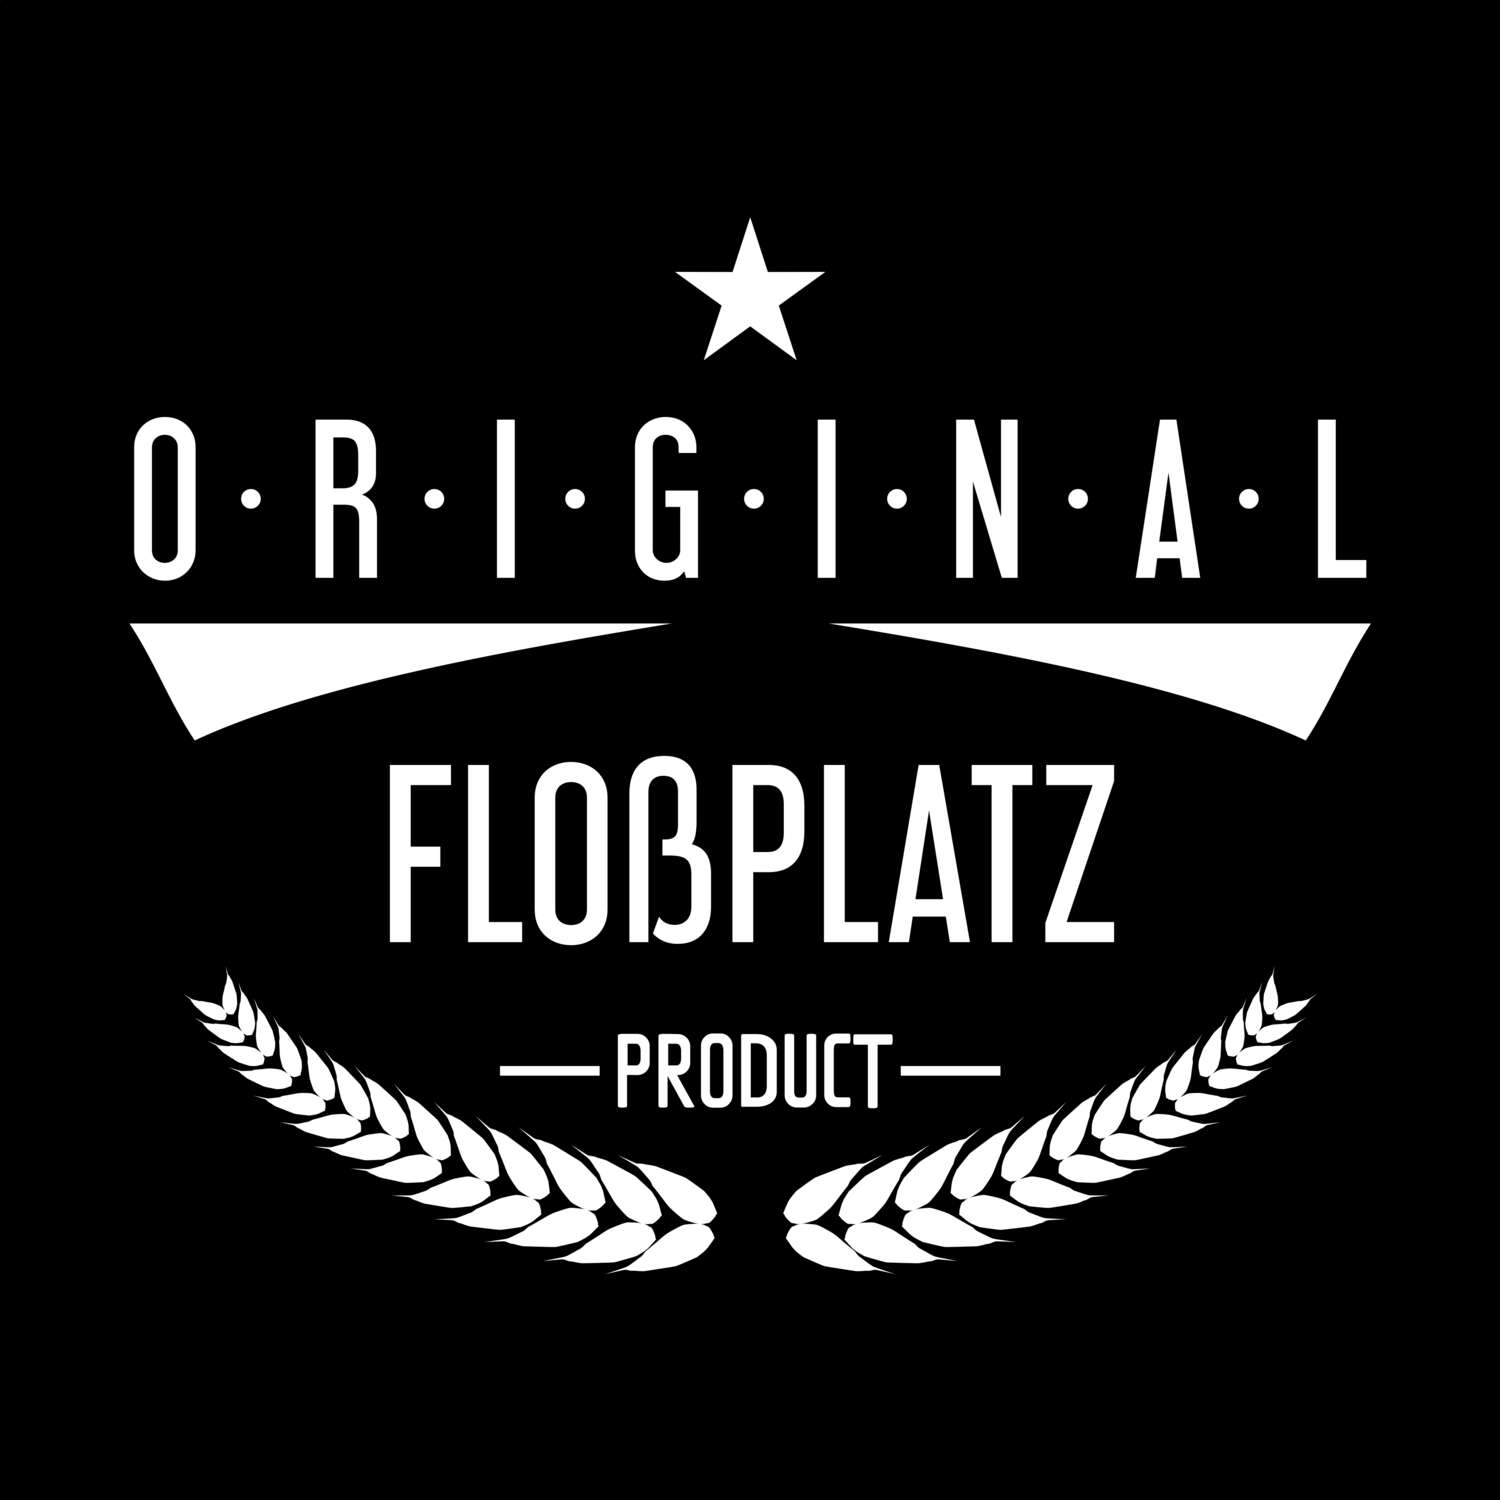 Floßplatz T-Shirt »Original Product«